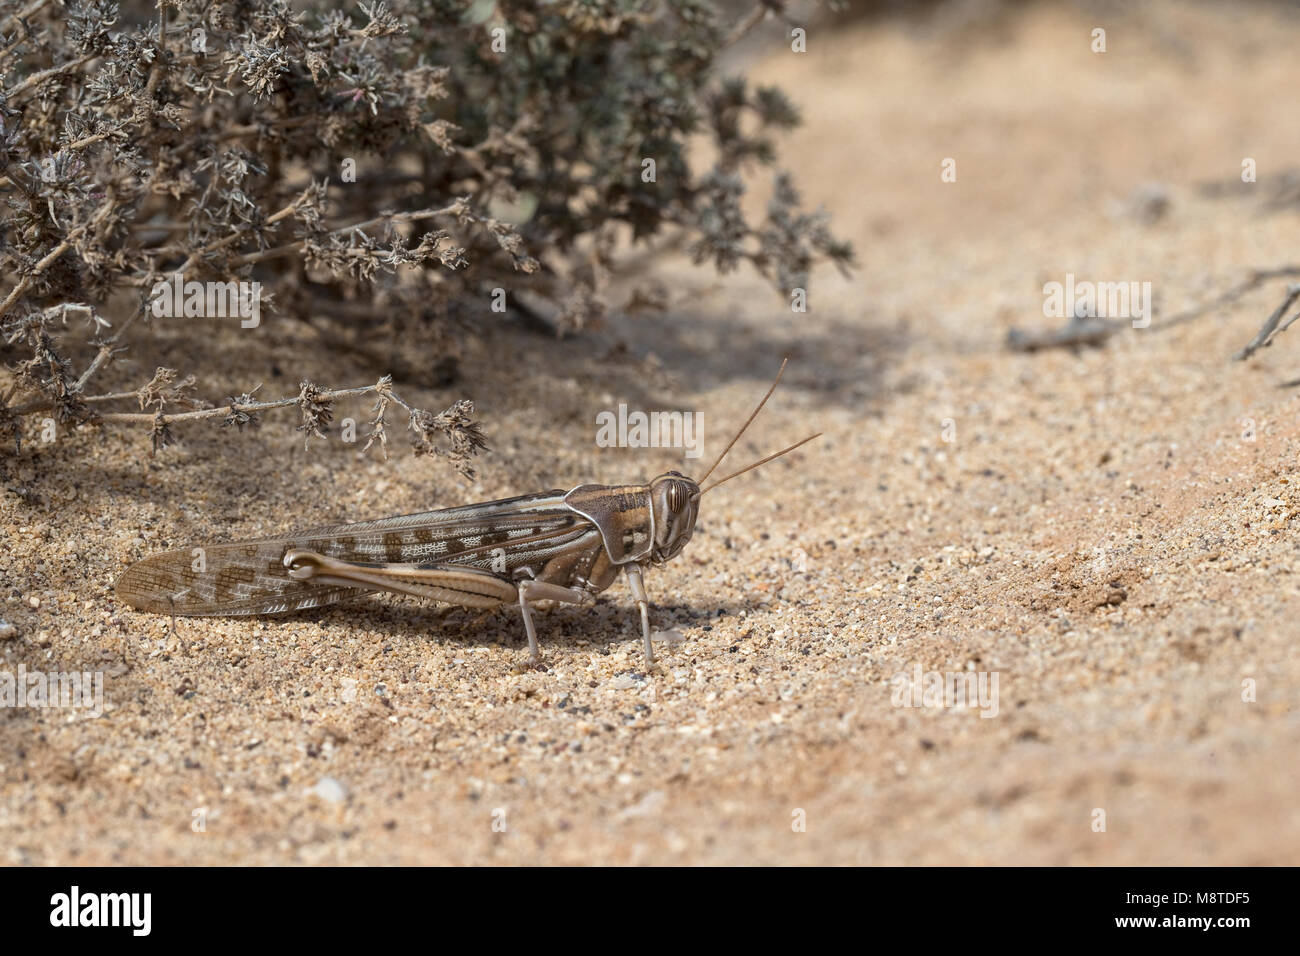 La langosta del desierto (Schistocerca gregaria) Foto de stock